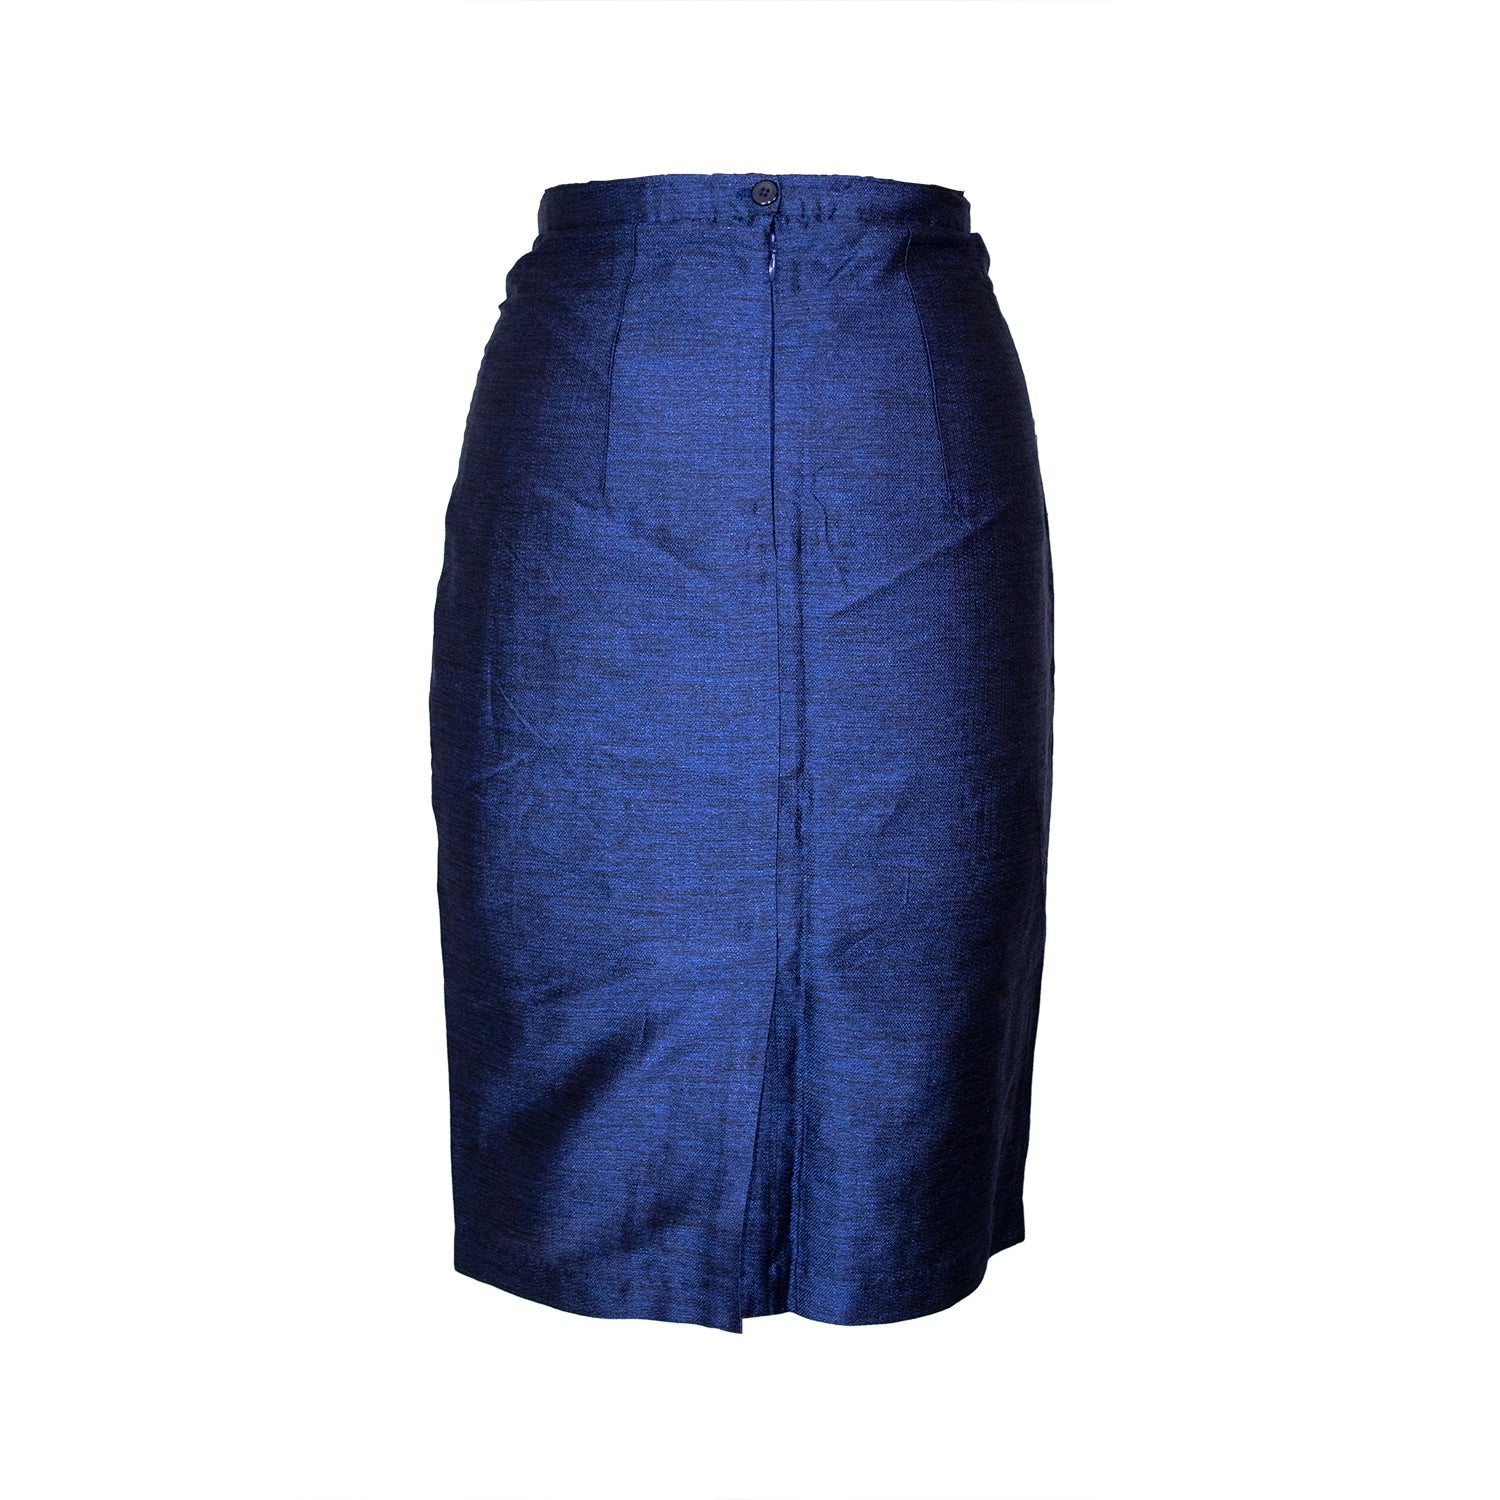 Siddhartha Tytlet Royal Blue Skirt